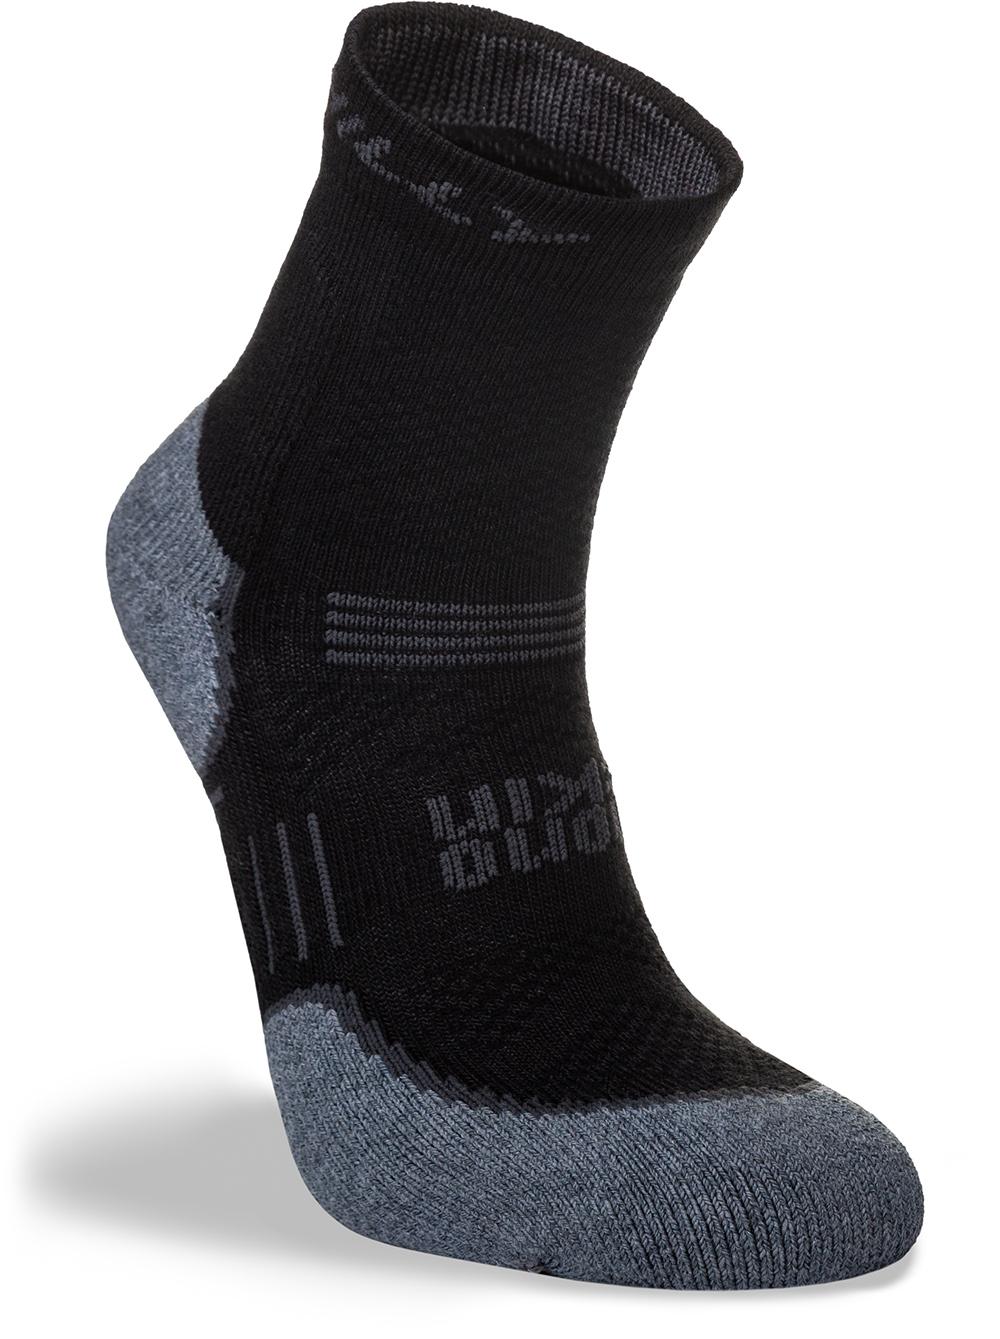 Hilly Supreme Anklet Max Cushioning - Black/grey Marl